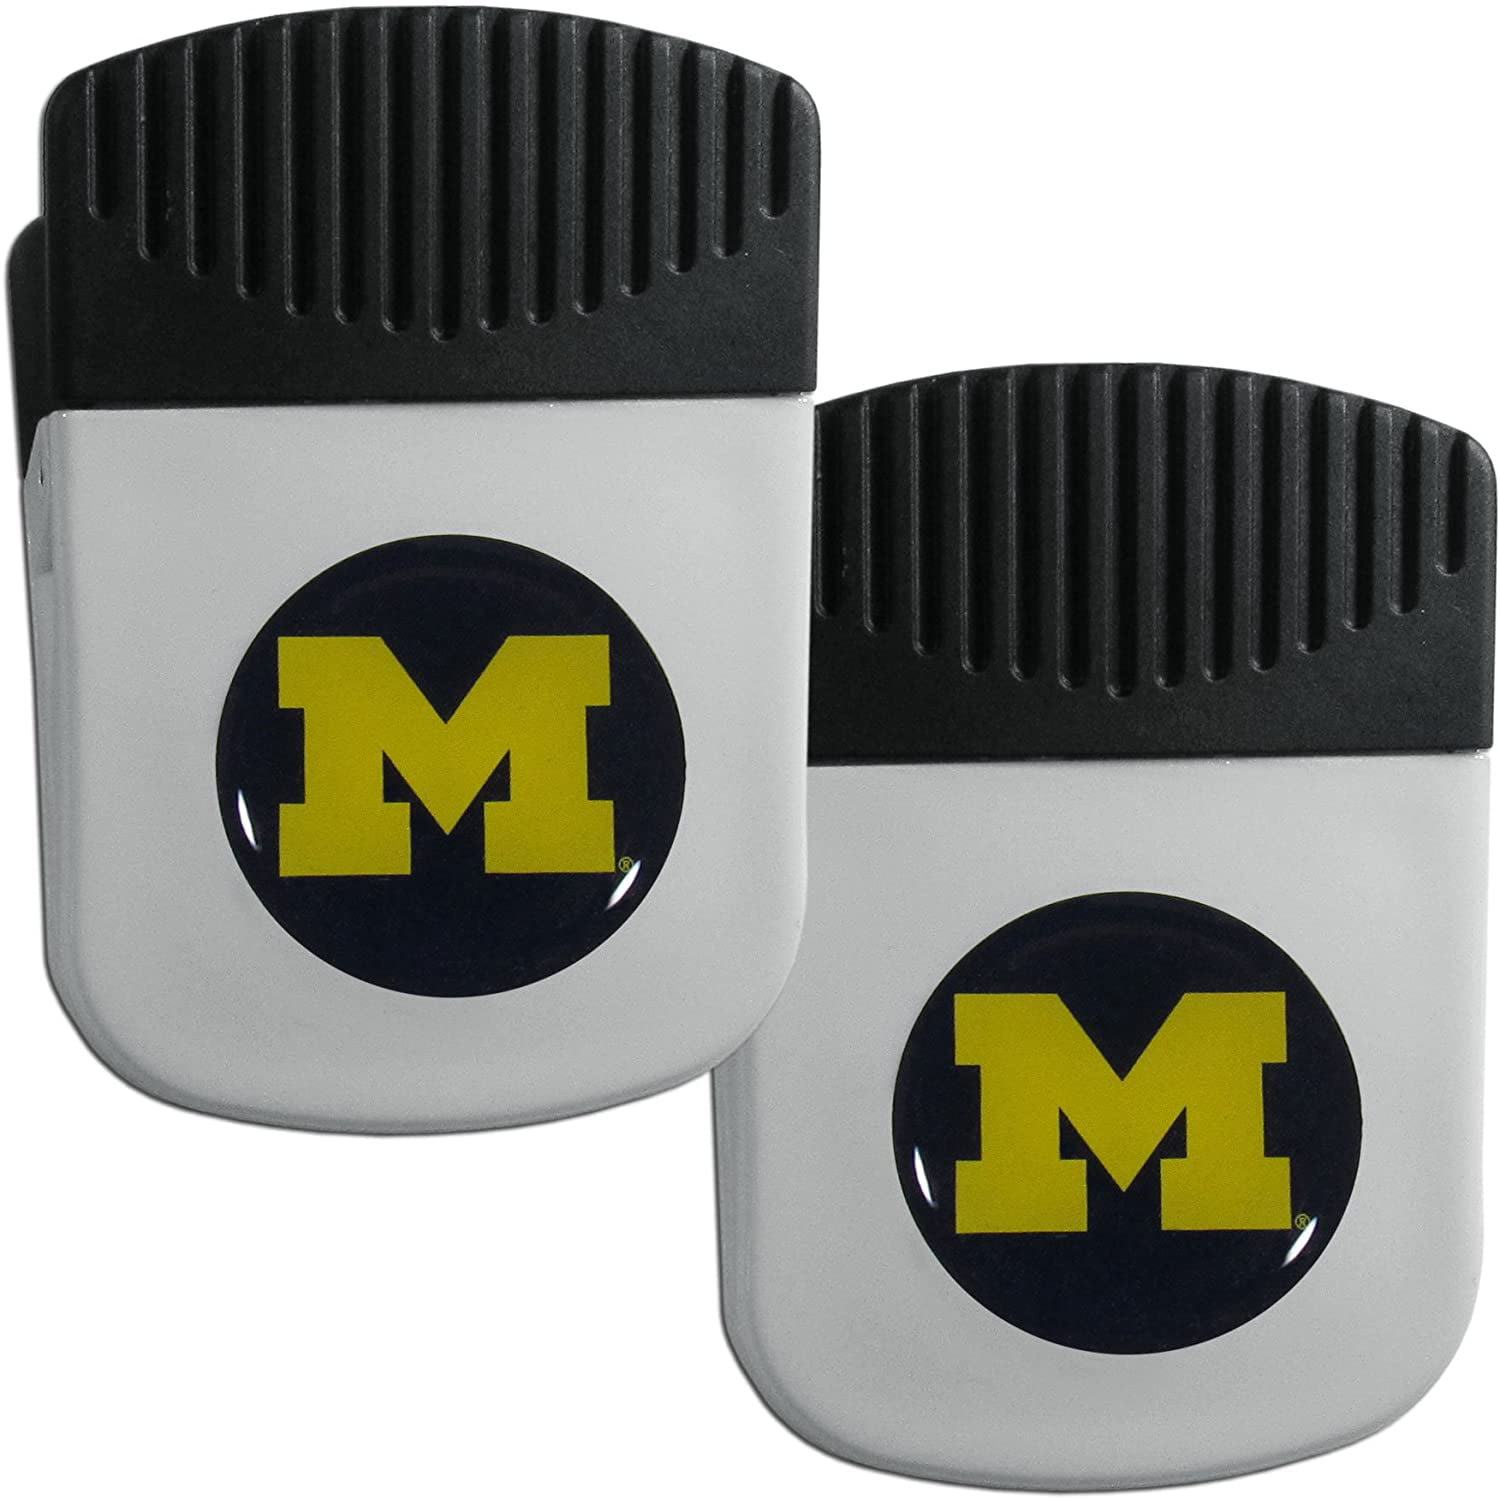 White Siskiyou Sports NCAA Chip Clip Magnet 